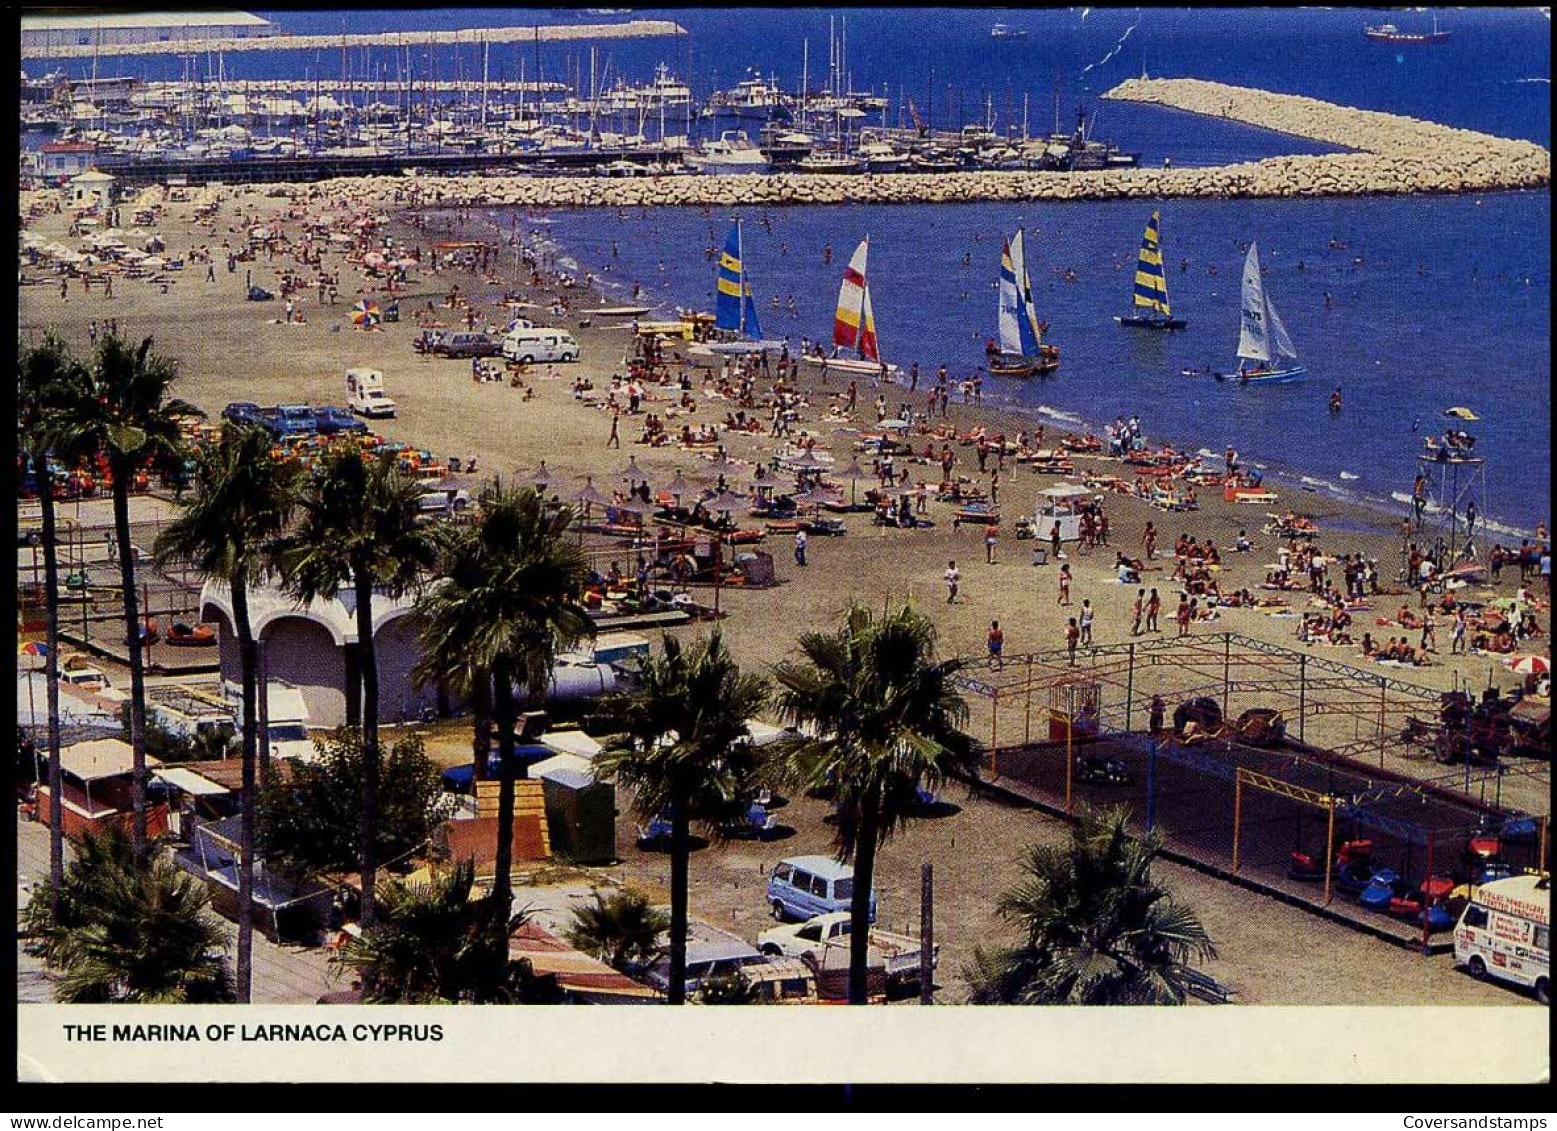 The Marina Of Larnaca, Cyprus - Cyprus